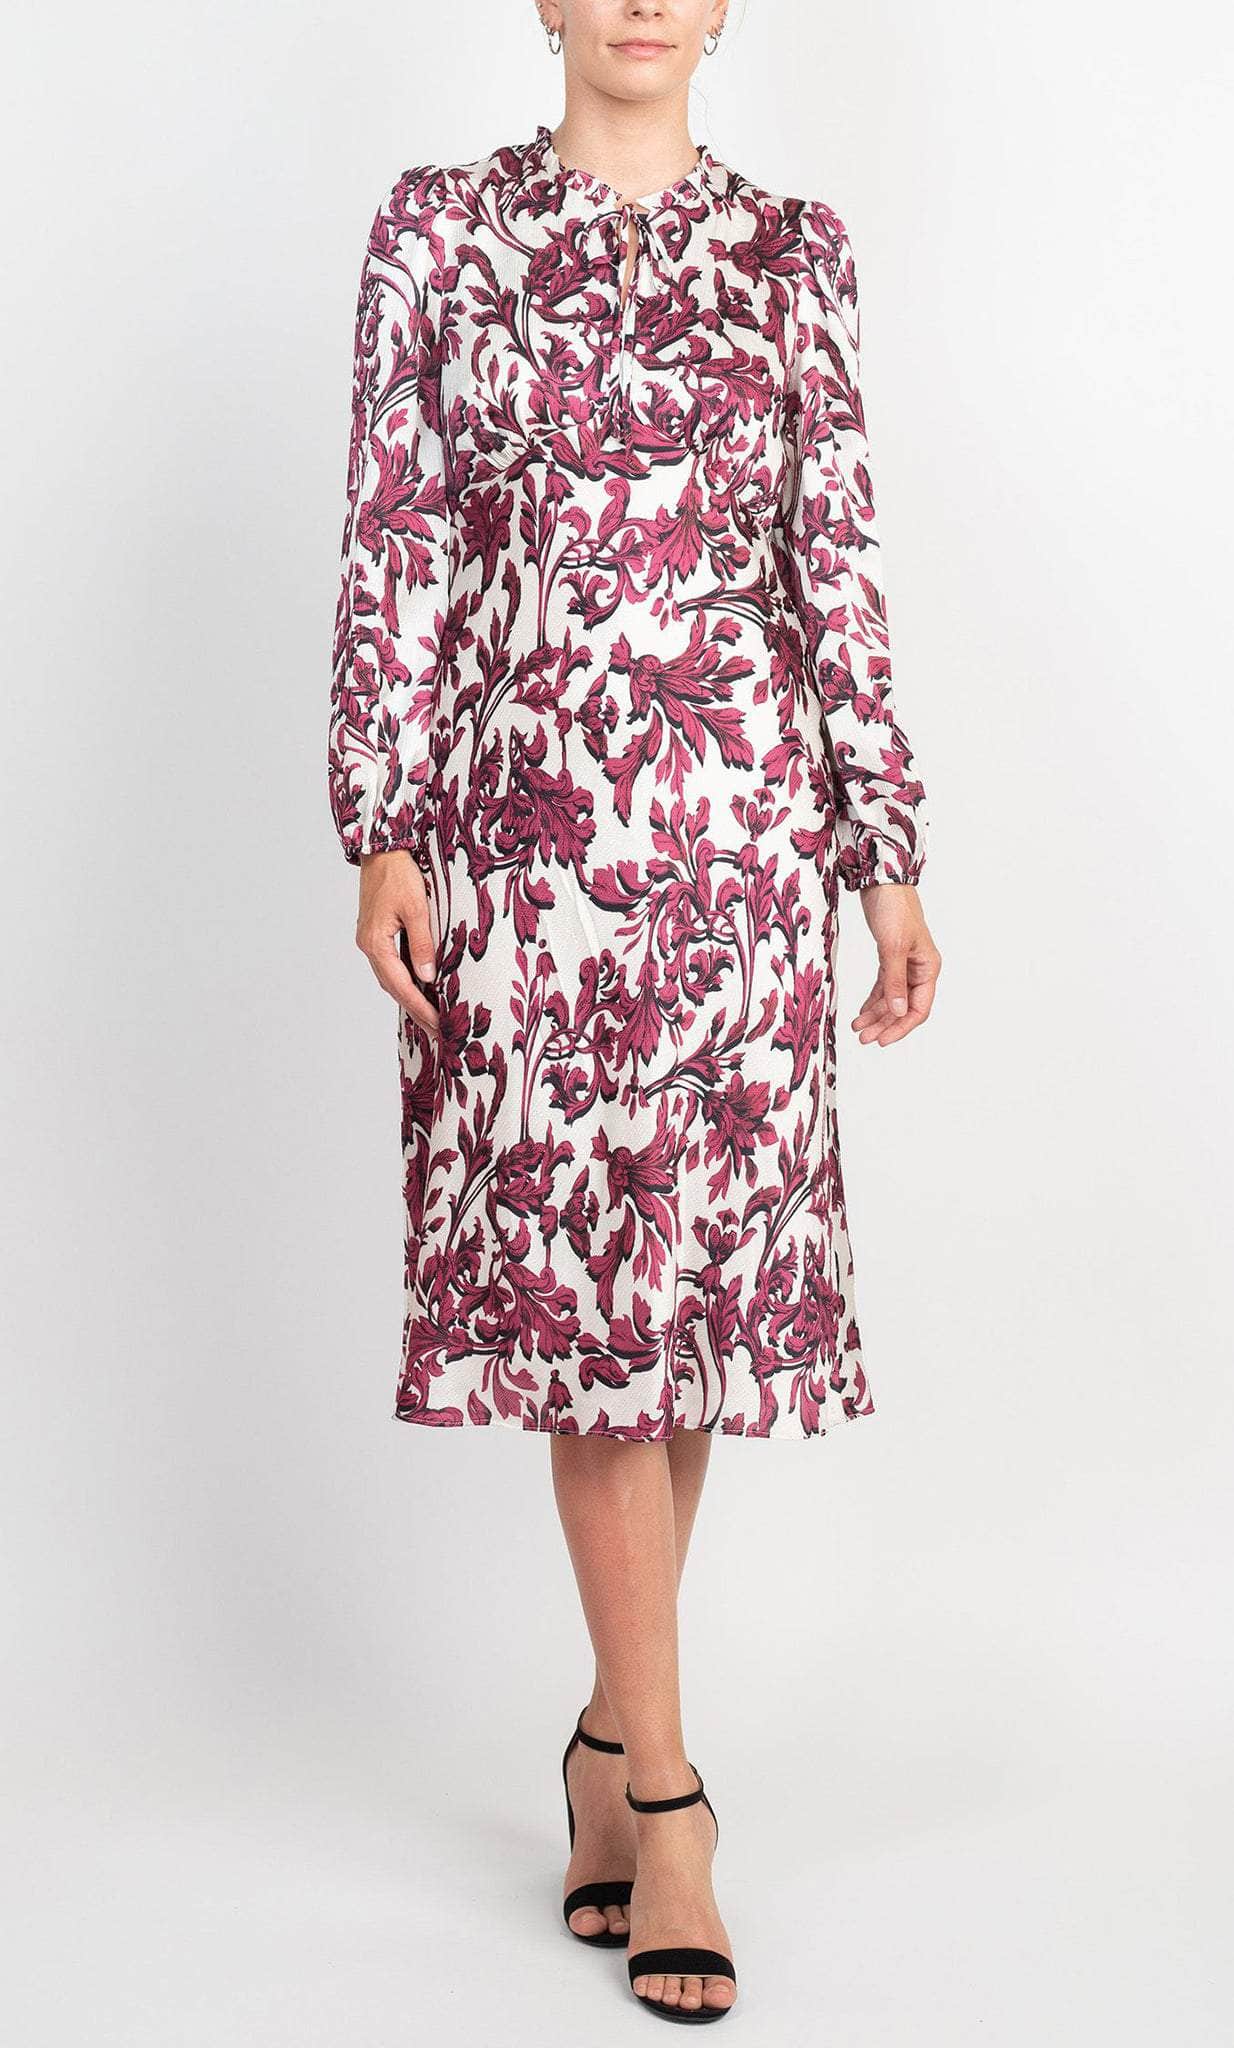 Adrianna Papell AP1D104268 - Long Sleeve Split Neck Knee-Length Dress Special Occasion Dress 4 / Burgundy Multi